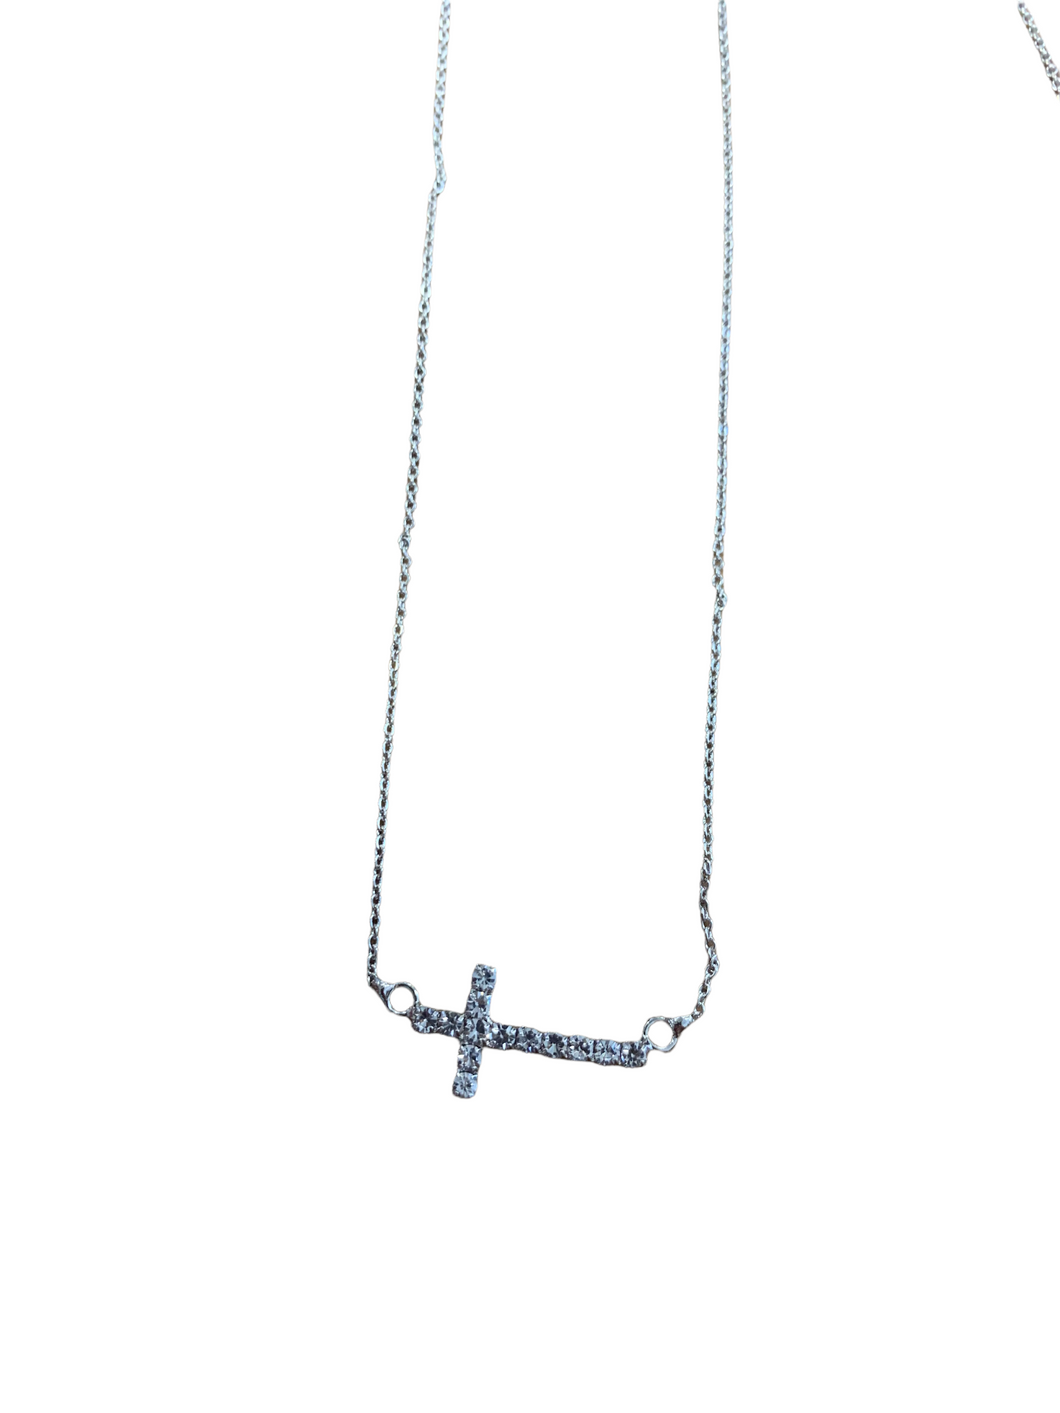 Studded Sideways Cross Necklace